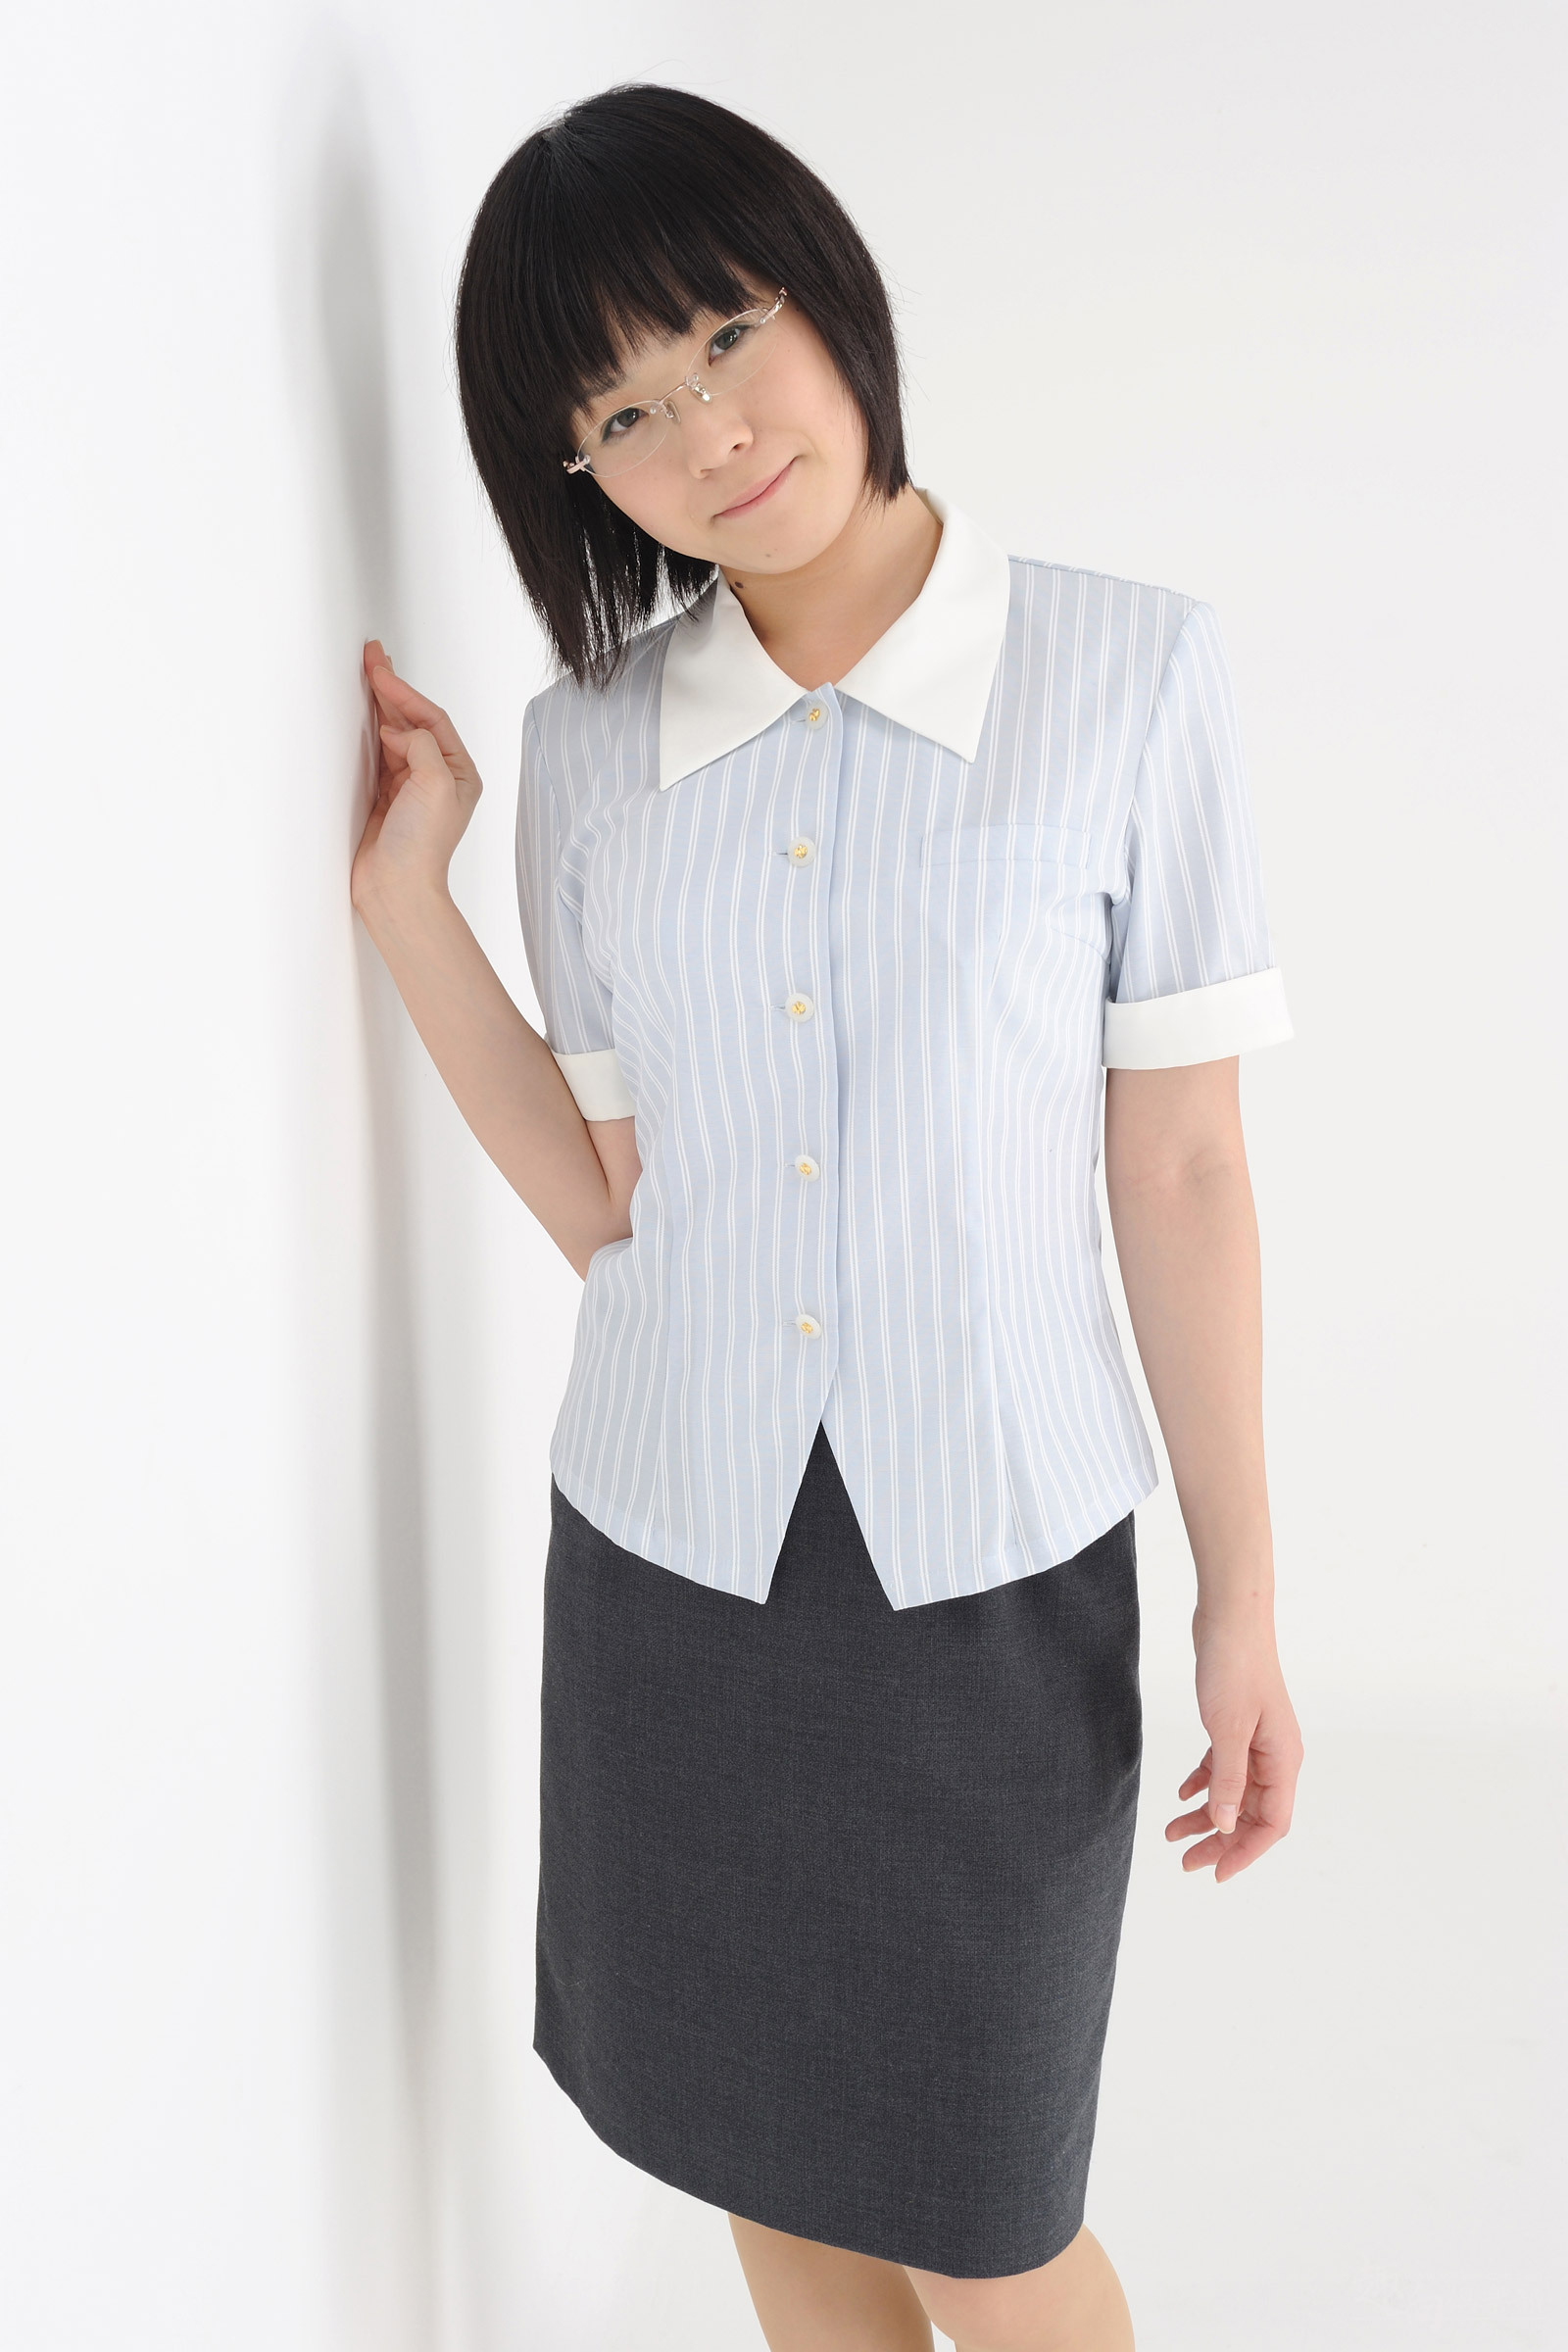 [syukou club] digi girl No.123 new secretary's Office